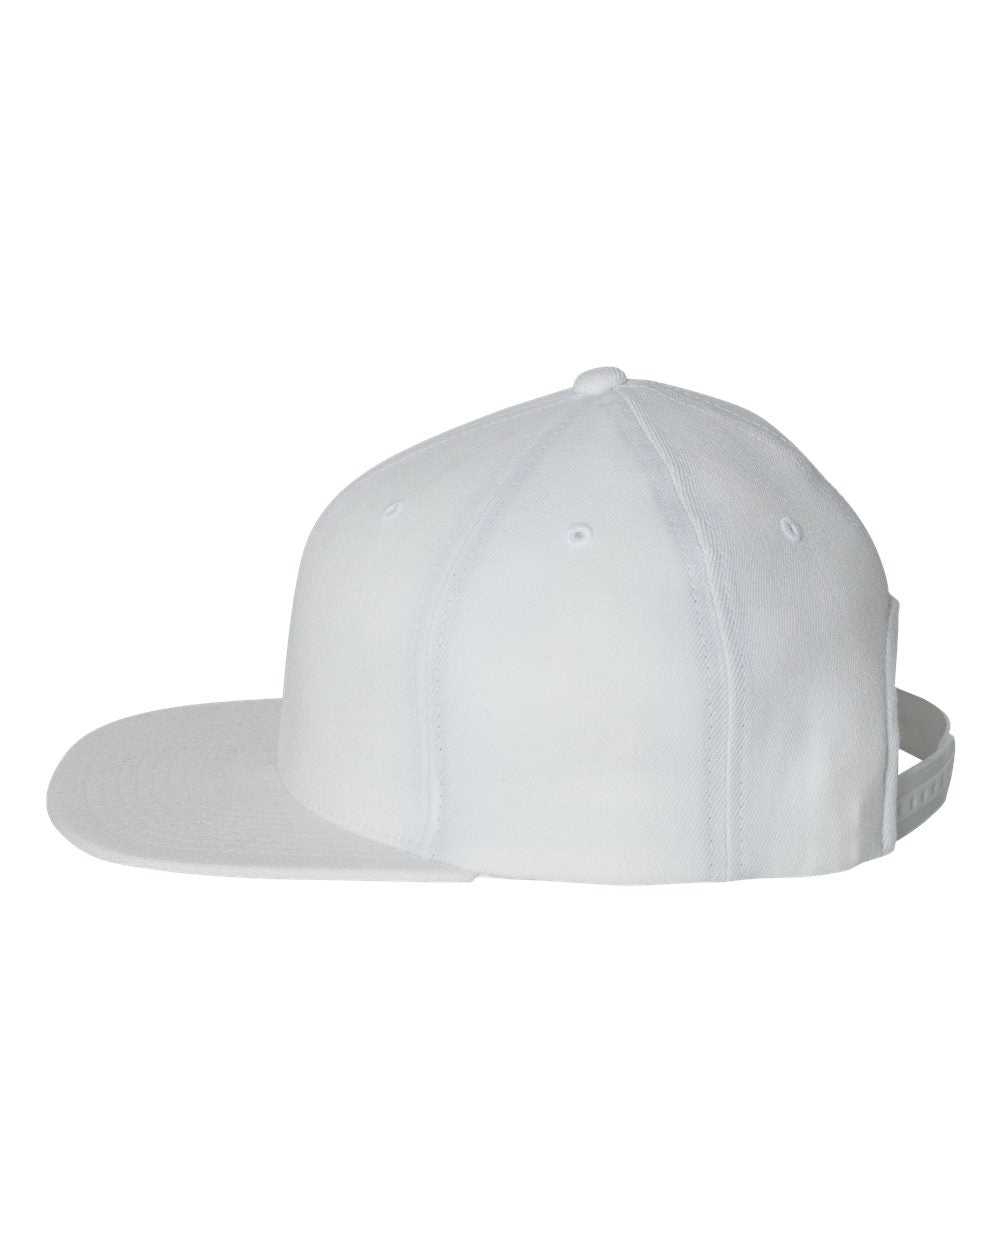 Side view of Flexfit 110F custom hat in white